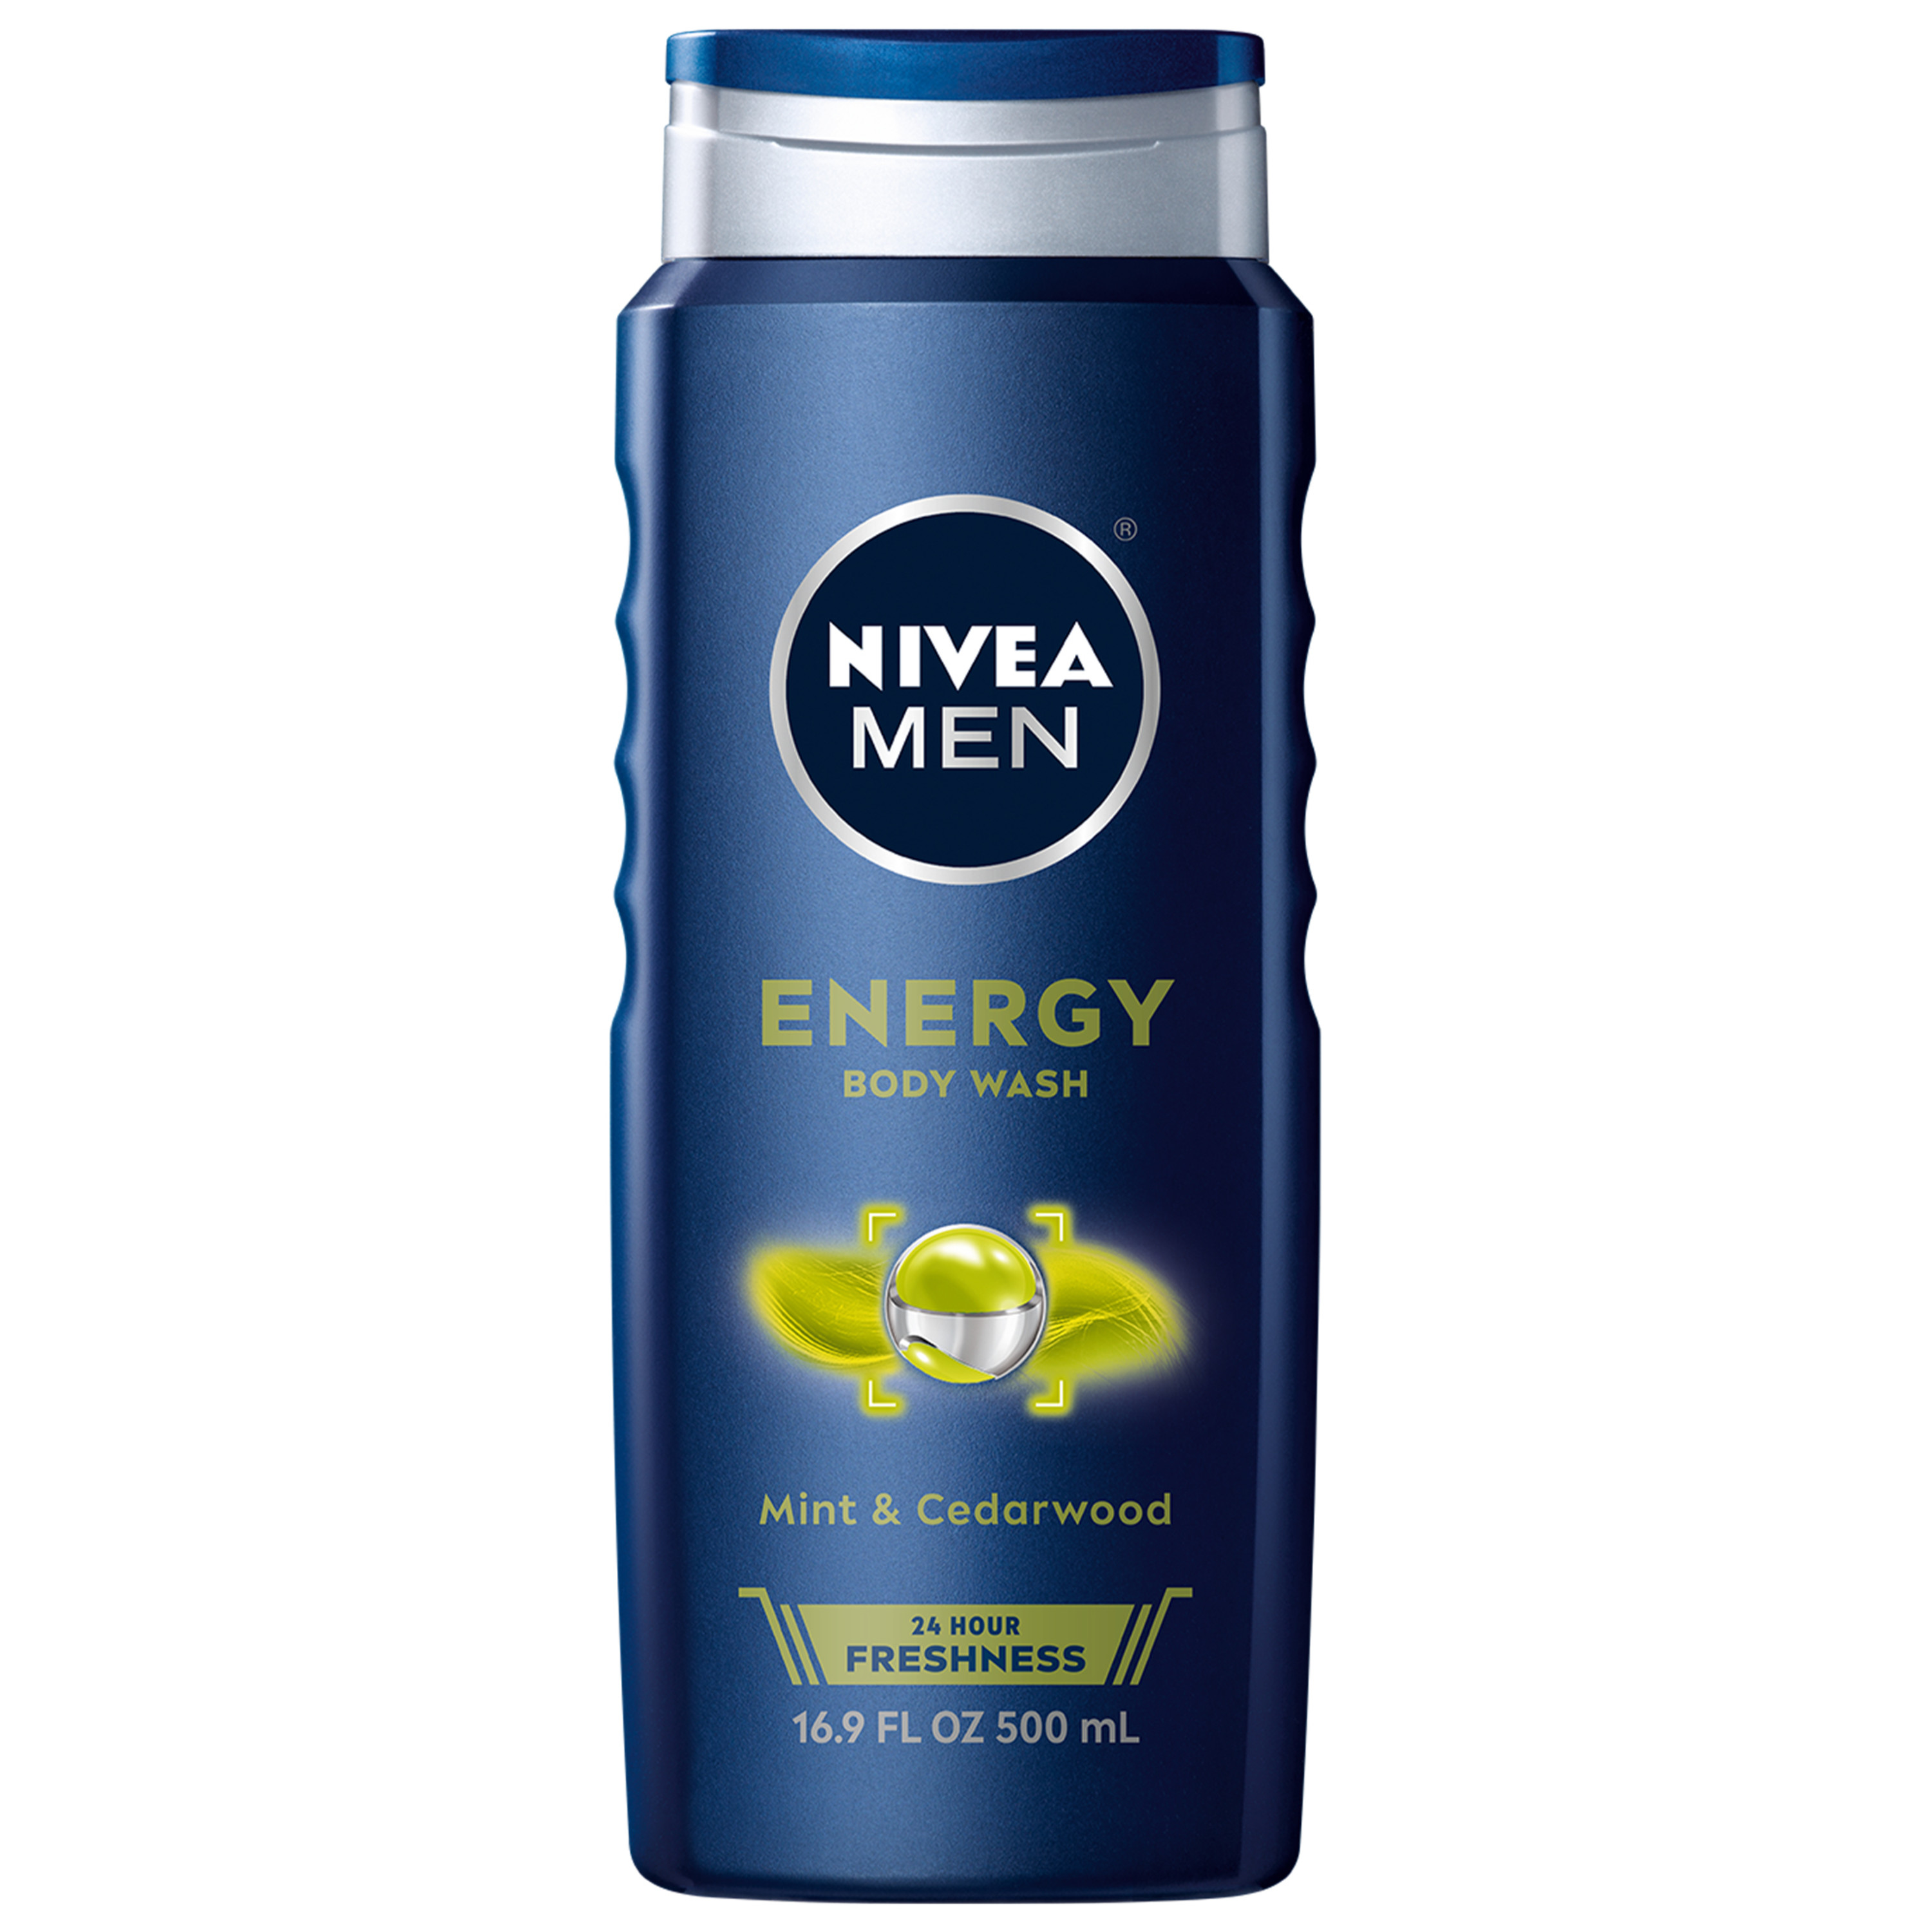 NIVEA MEN Energy Body Wash for Mint Extract, 16.9 Fl Oz Bottle - image 1 of 6